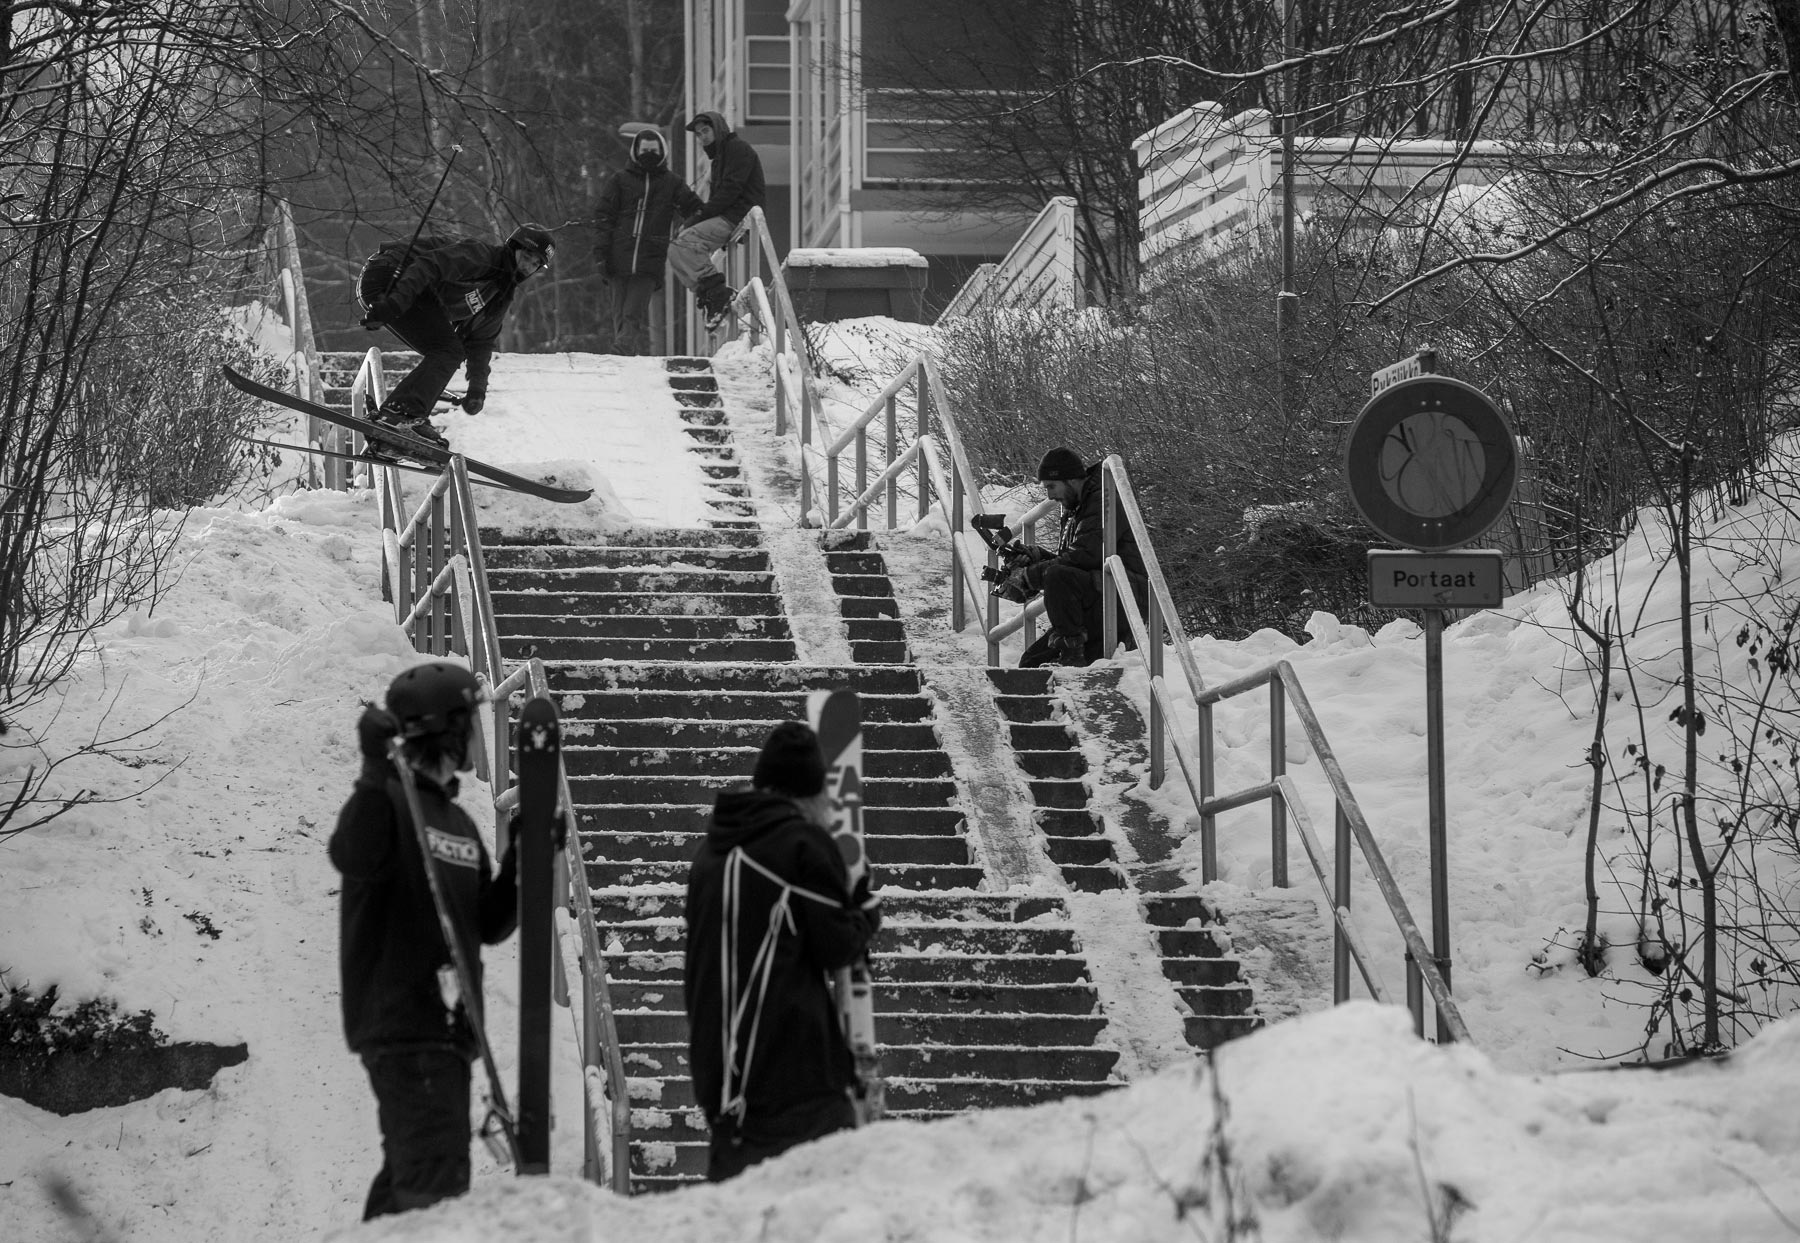 Street Action in Finnland für den neuen Faction Skis Full-Movie. Rider: Daniel Hanka - Foto: Tero Repo